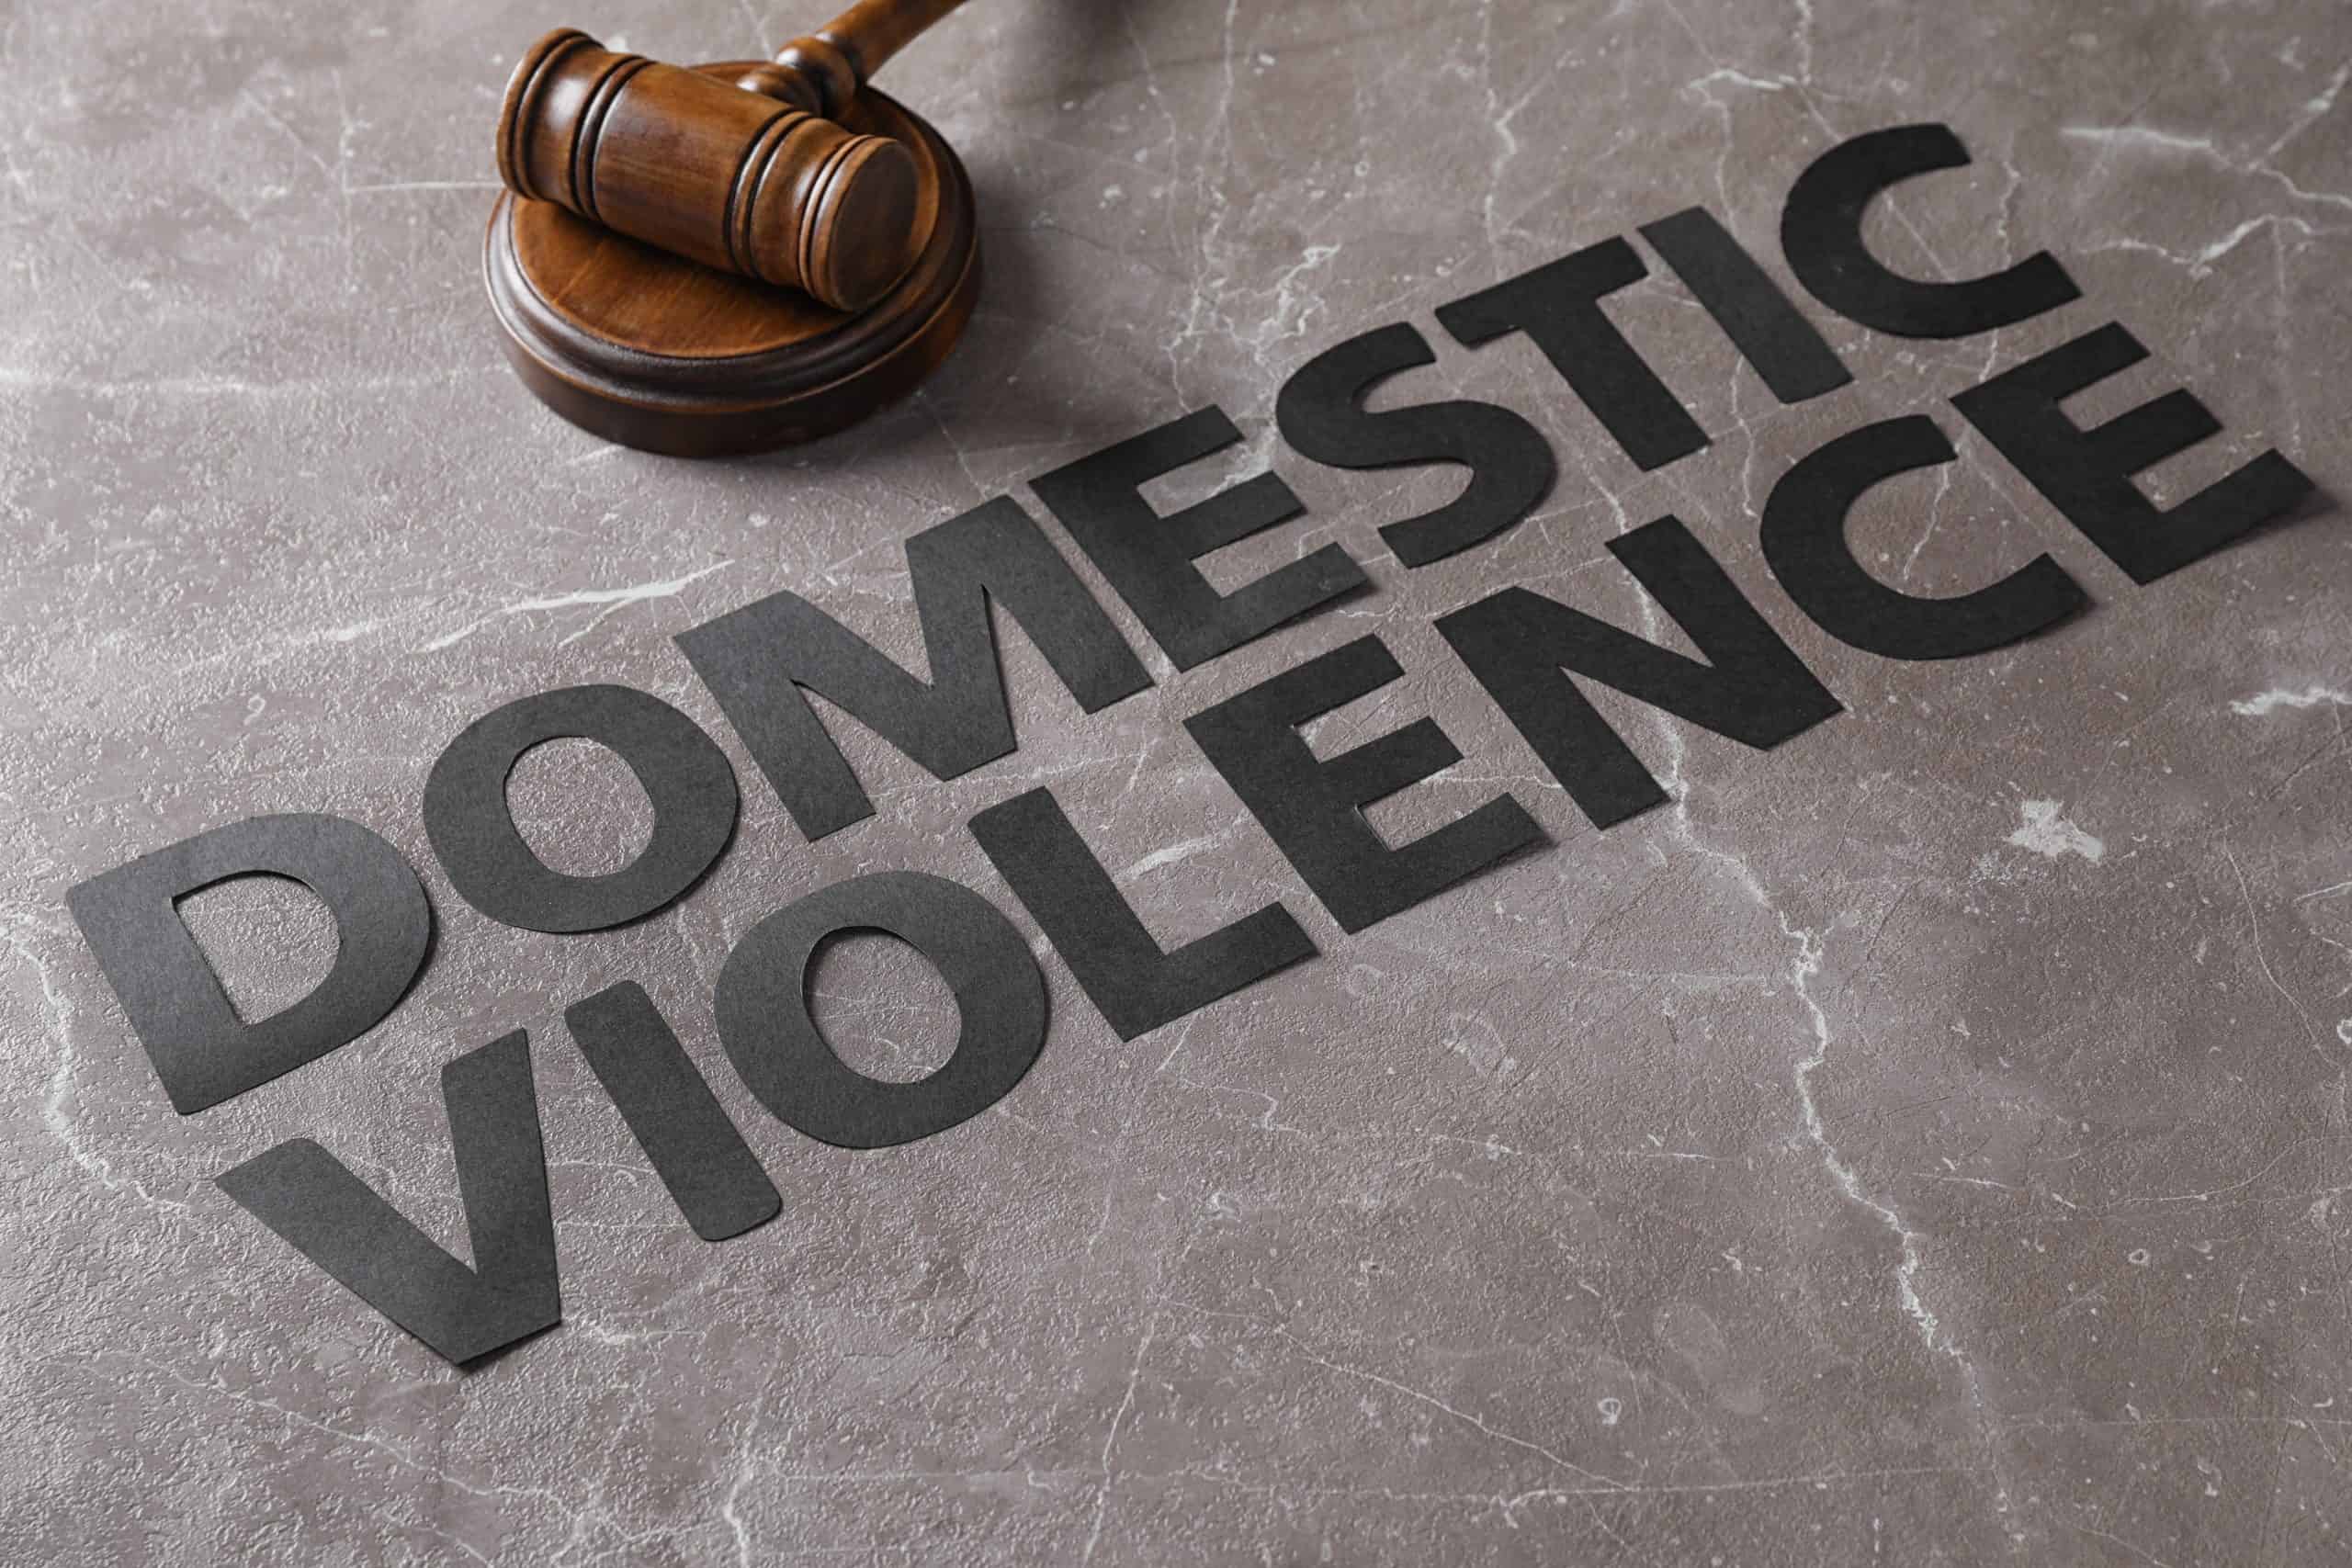 Domestic Violence arrest can destroy your life